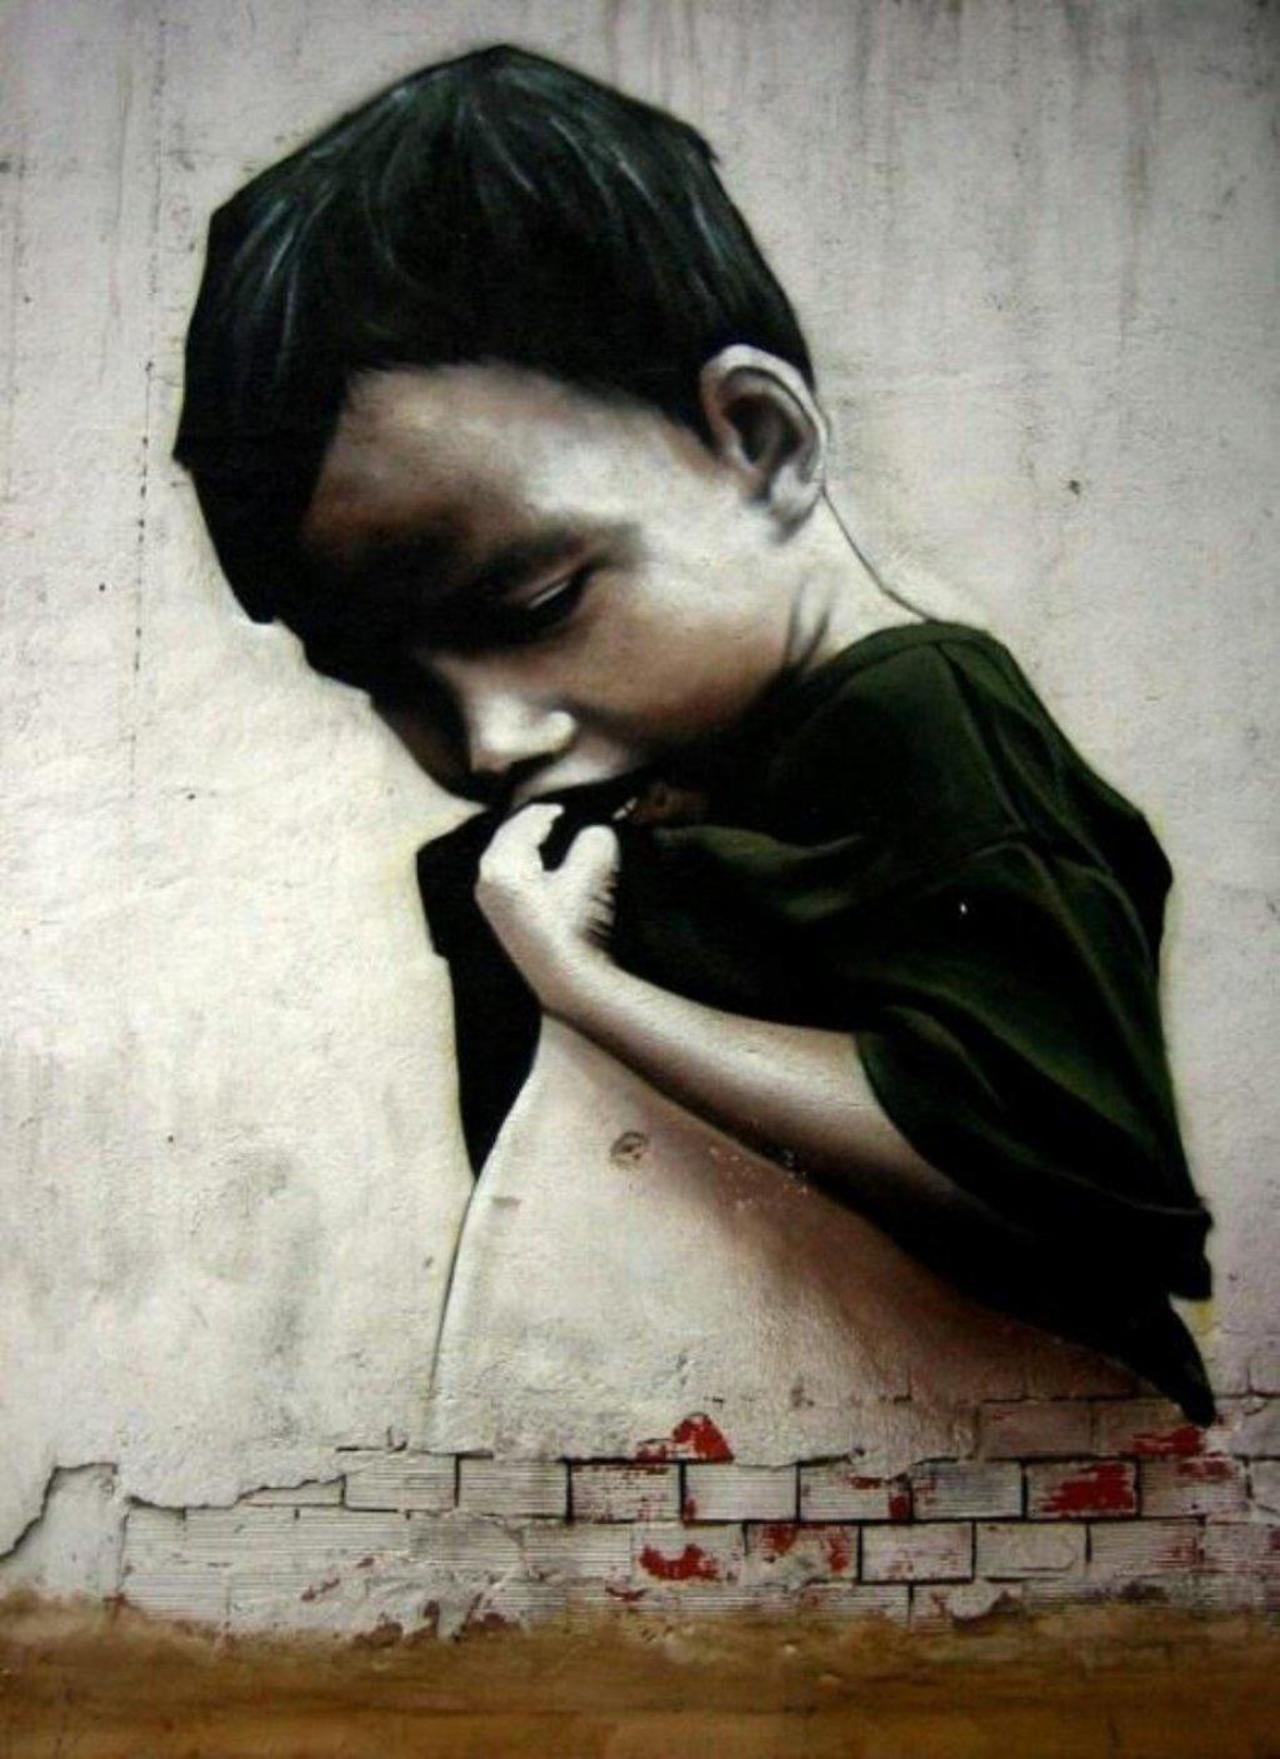 RT @Brindille_: #Streetart #urbanart #painting #graffiti
"Children series" by Spanish #artist Igor Rezola aka "Dizebi" http://t.co/qVpglSxpF9